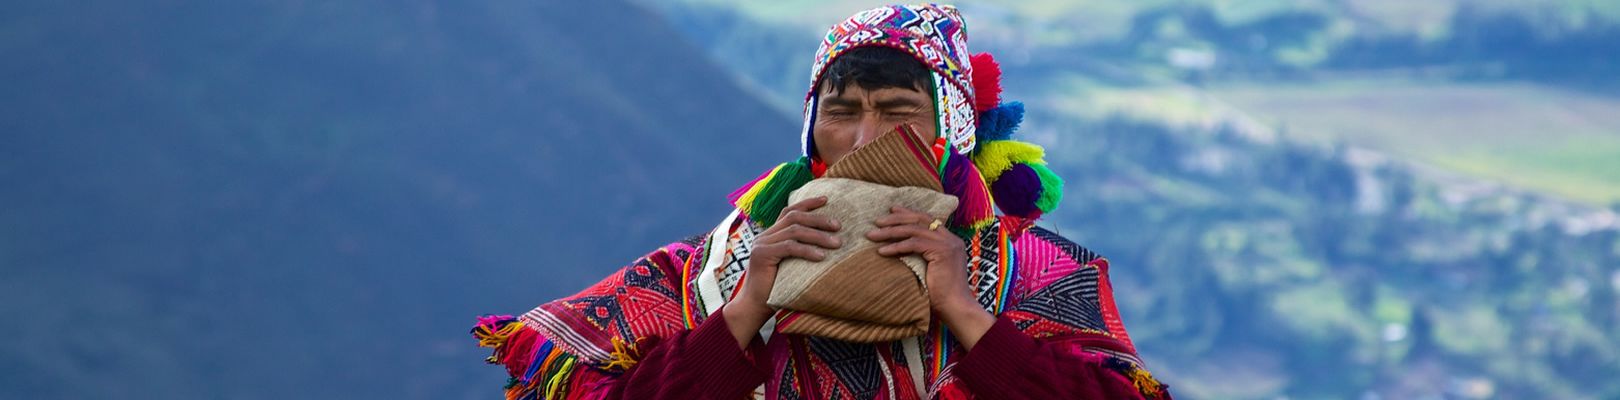 musicien-andin-cuzco